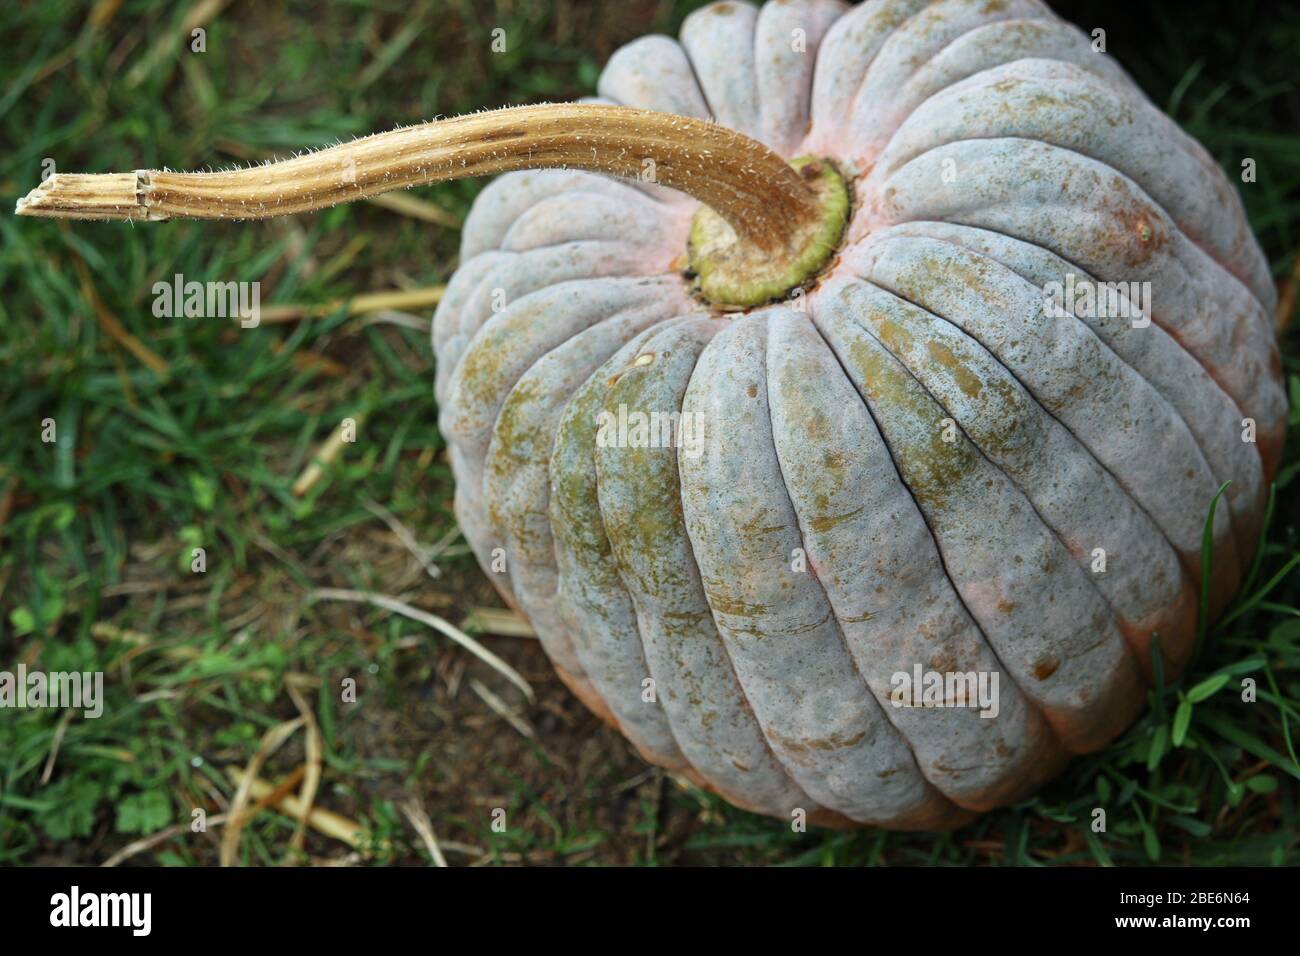 Black futsu pumpkin squash variety of Cucurbita moschata, with grass in ...